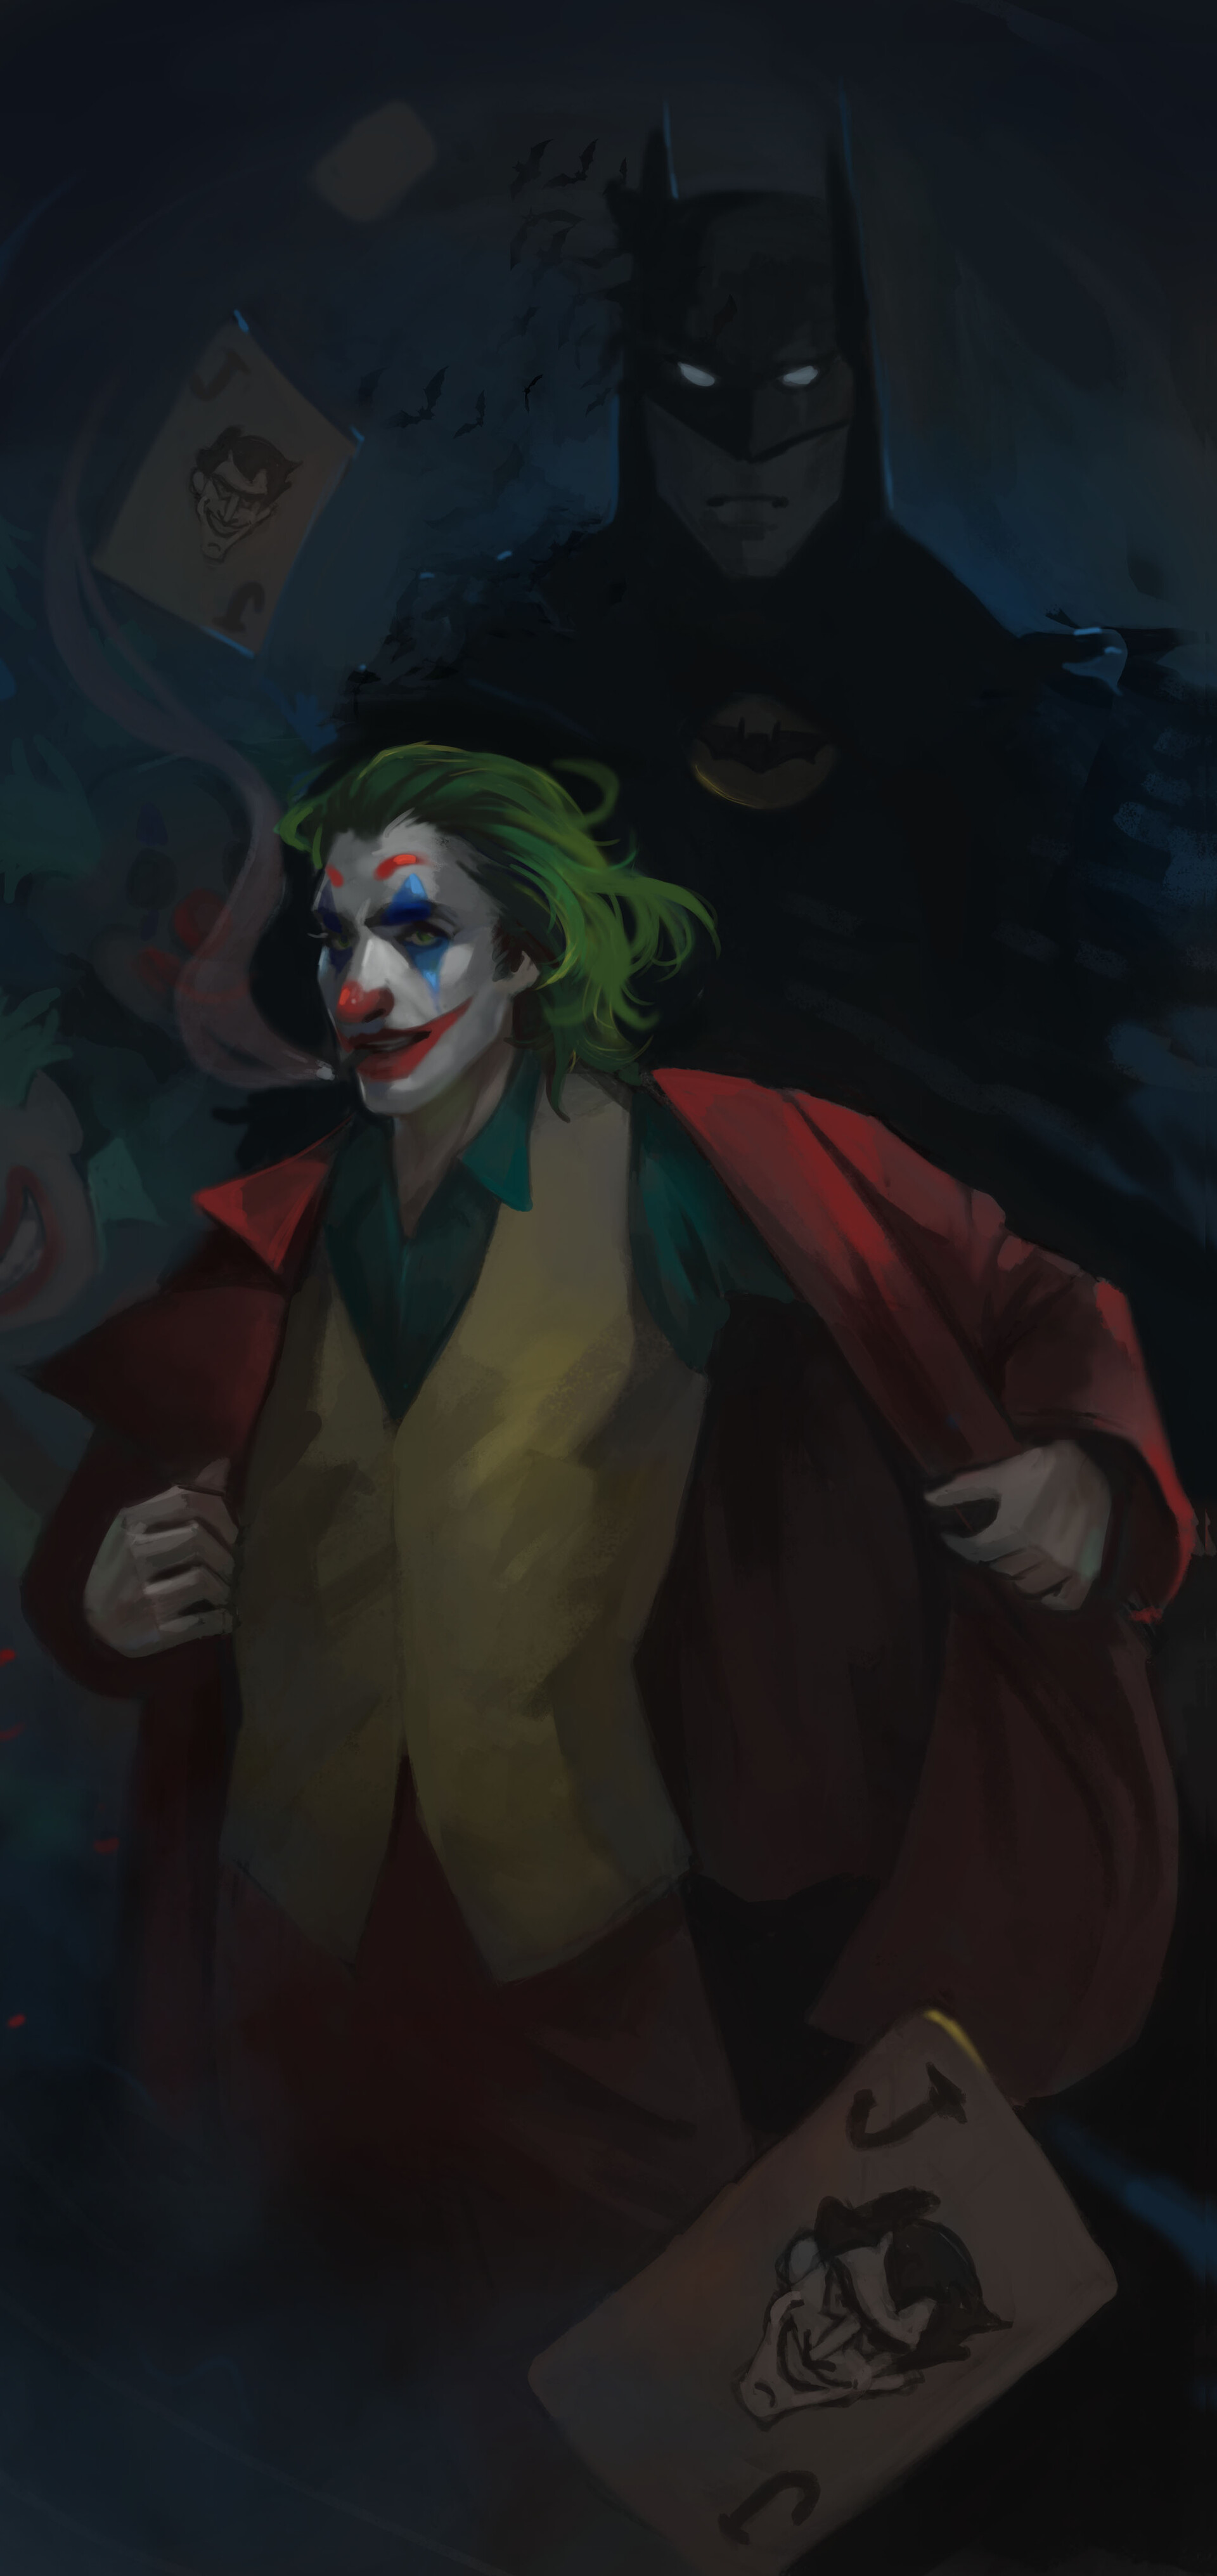 ArtStation - Joker and Batman